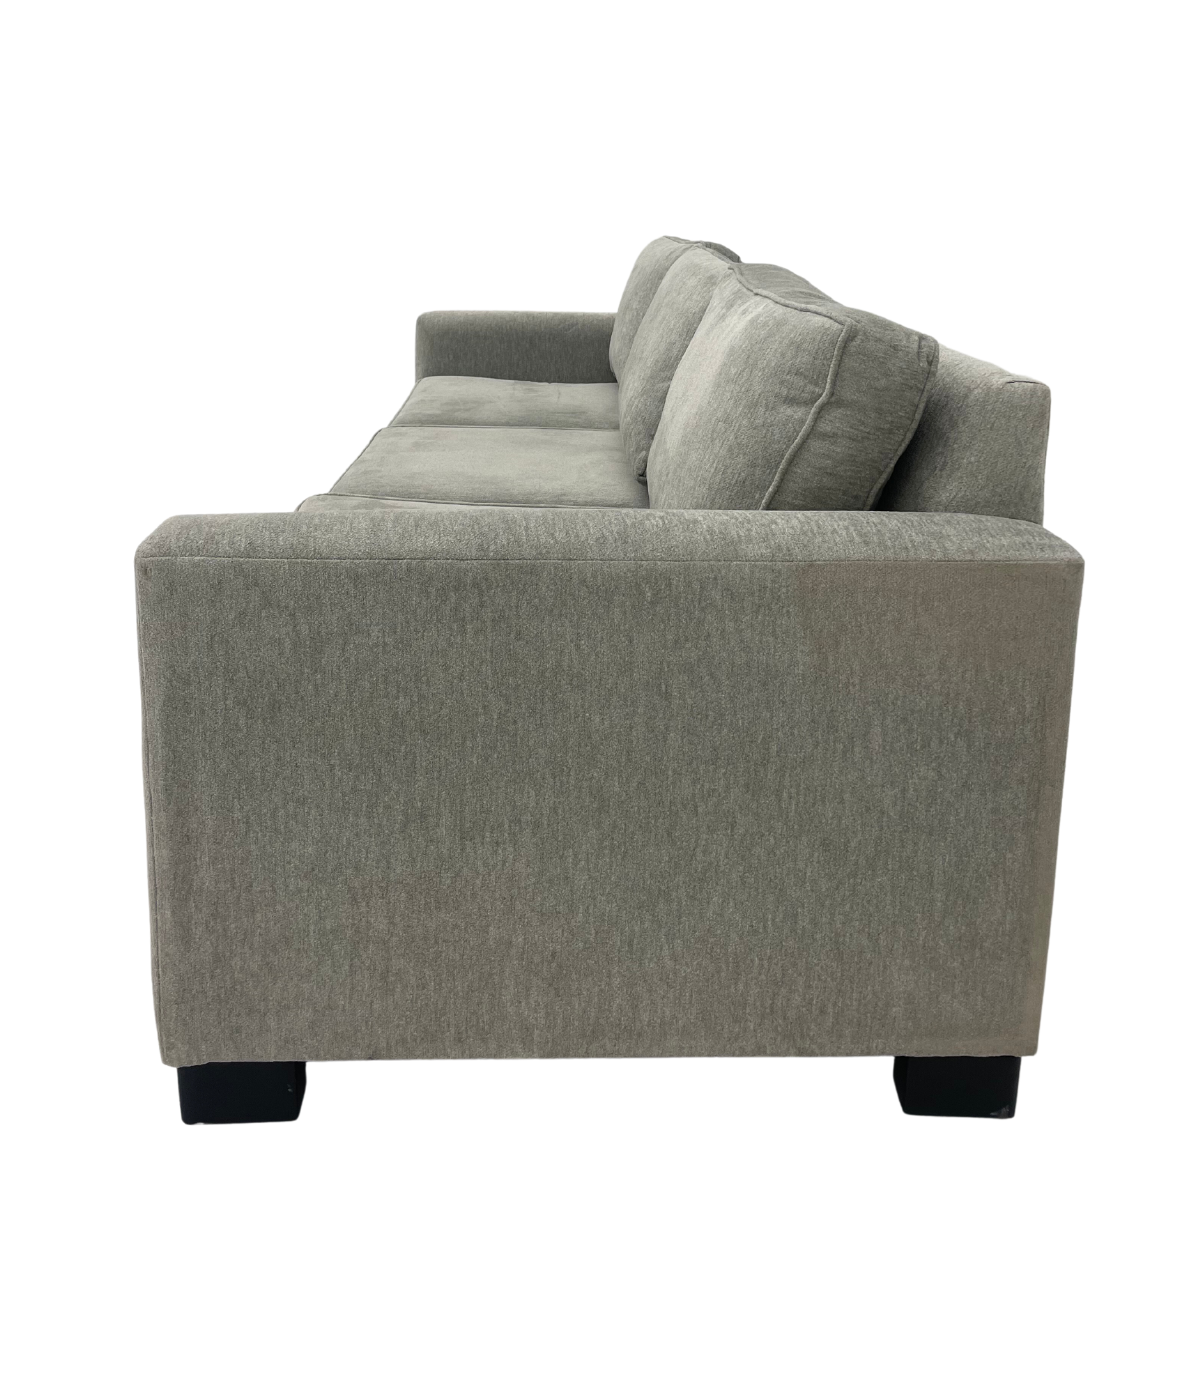 Cypress 3 Seater Sofa - Sandstone